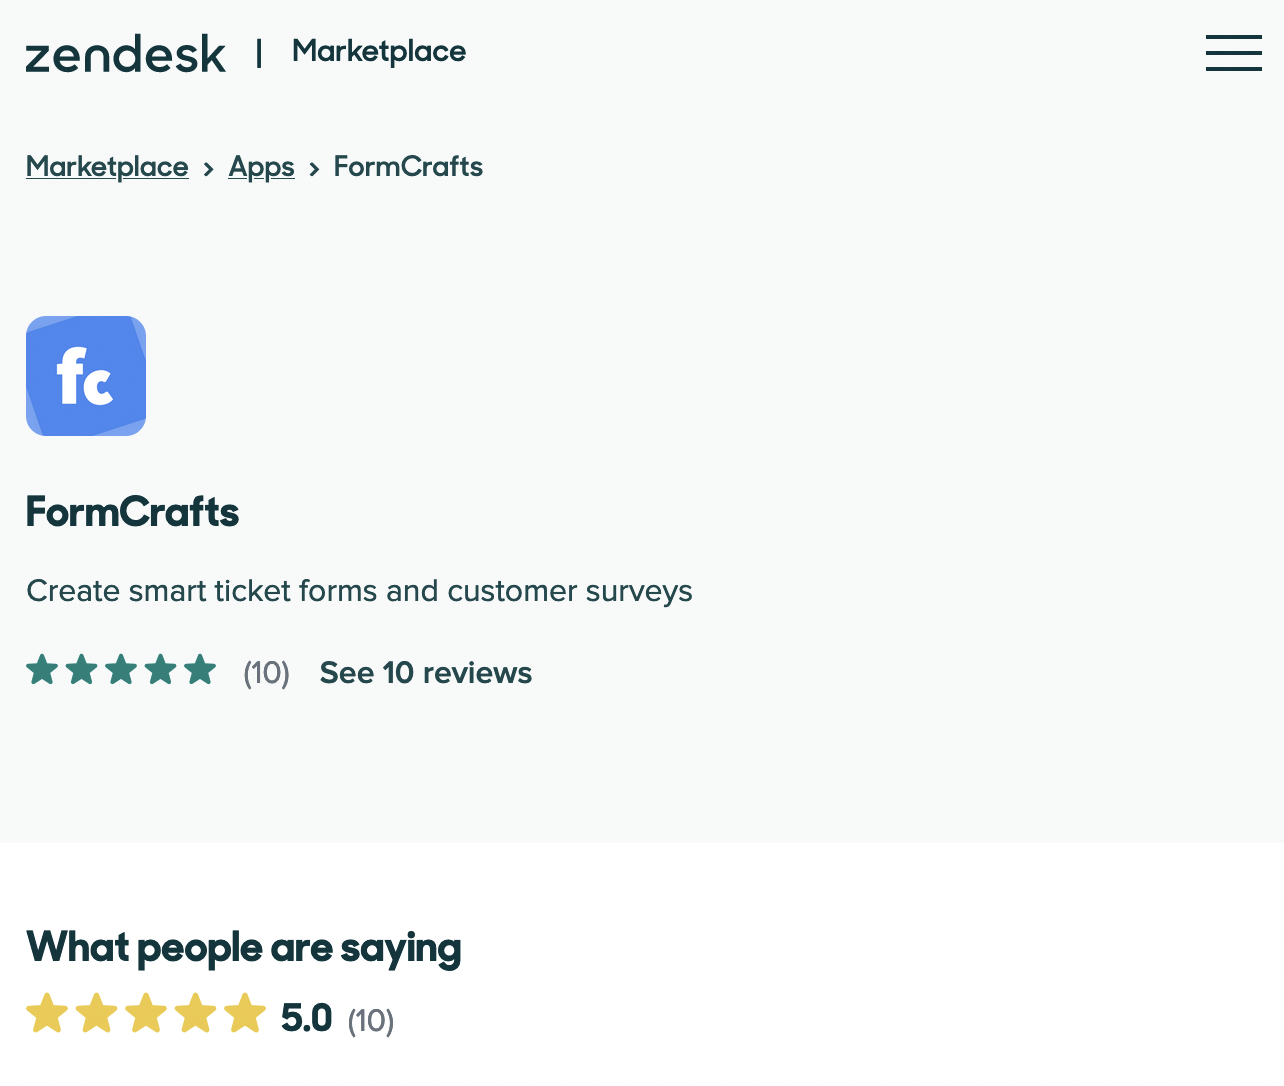 Zendesk marketplace reviews for FormCrafts